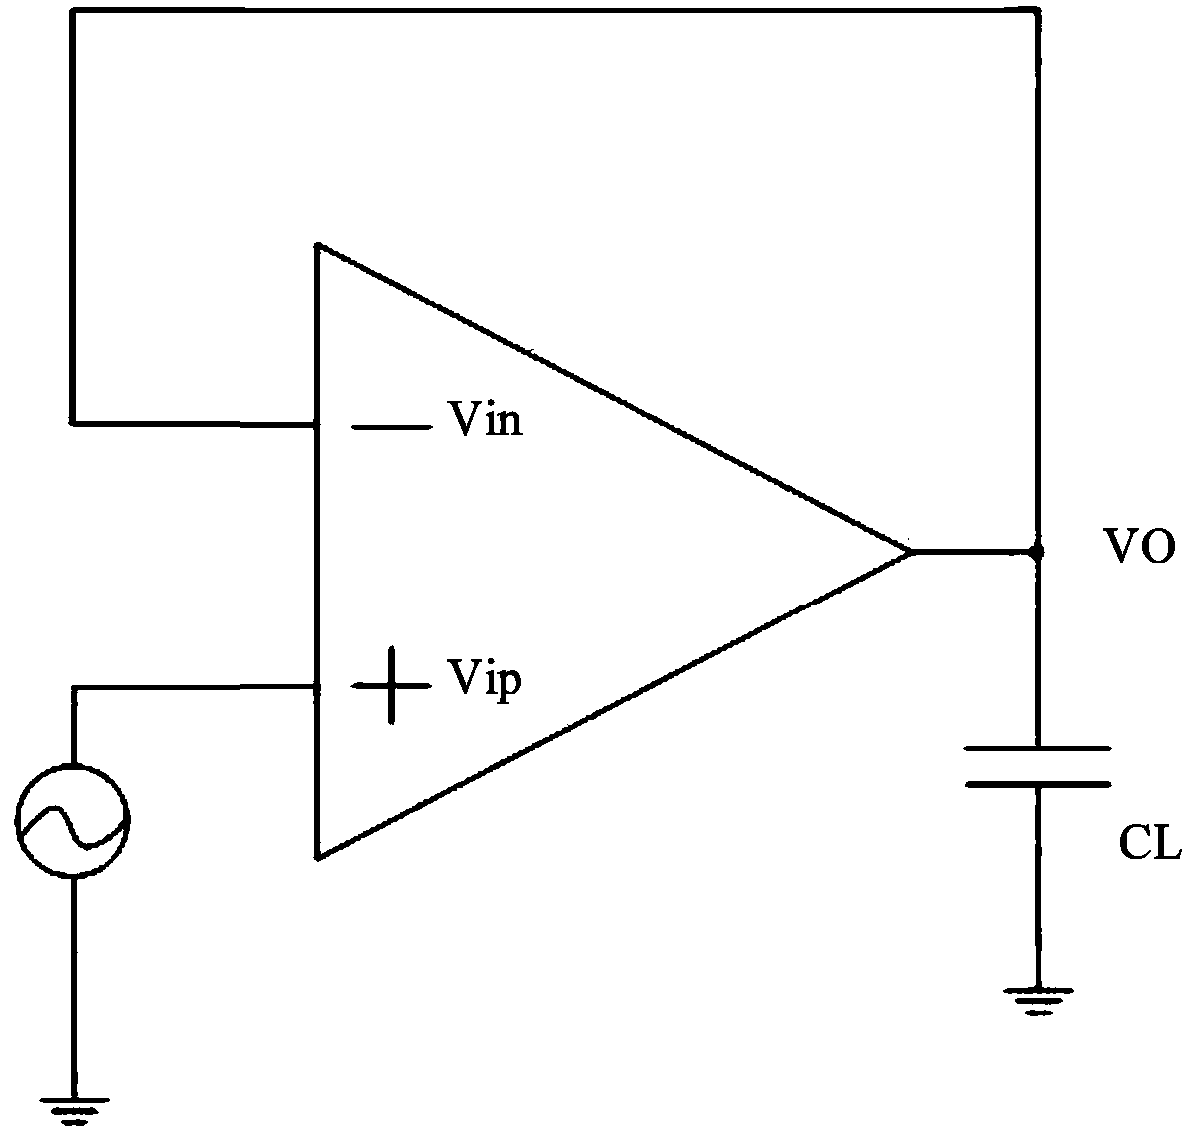 Operational amplifier circuit